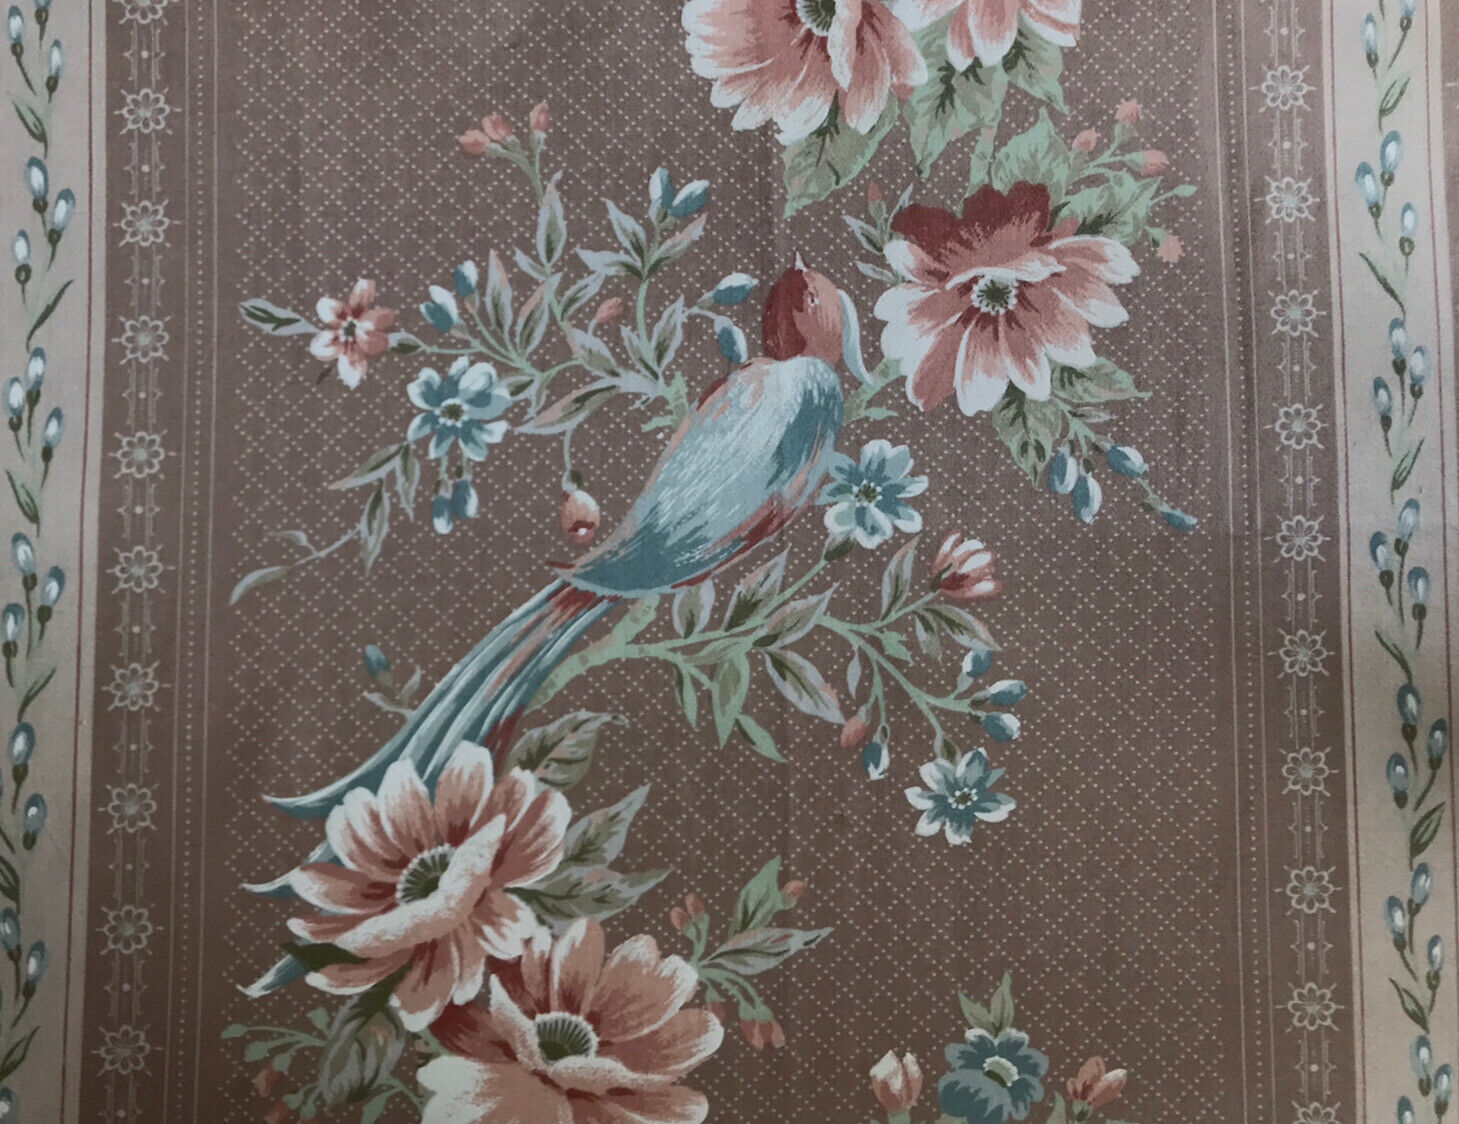  Rectella  Fabric‘Two’s Company ‘ Bird Cotton Mushroom & Pink & Blue  FQ 22”x20”